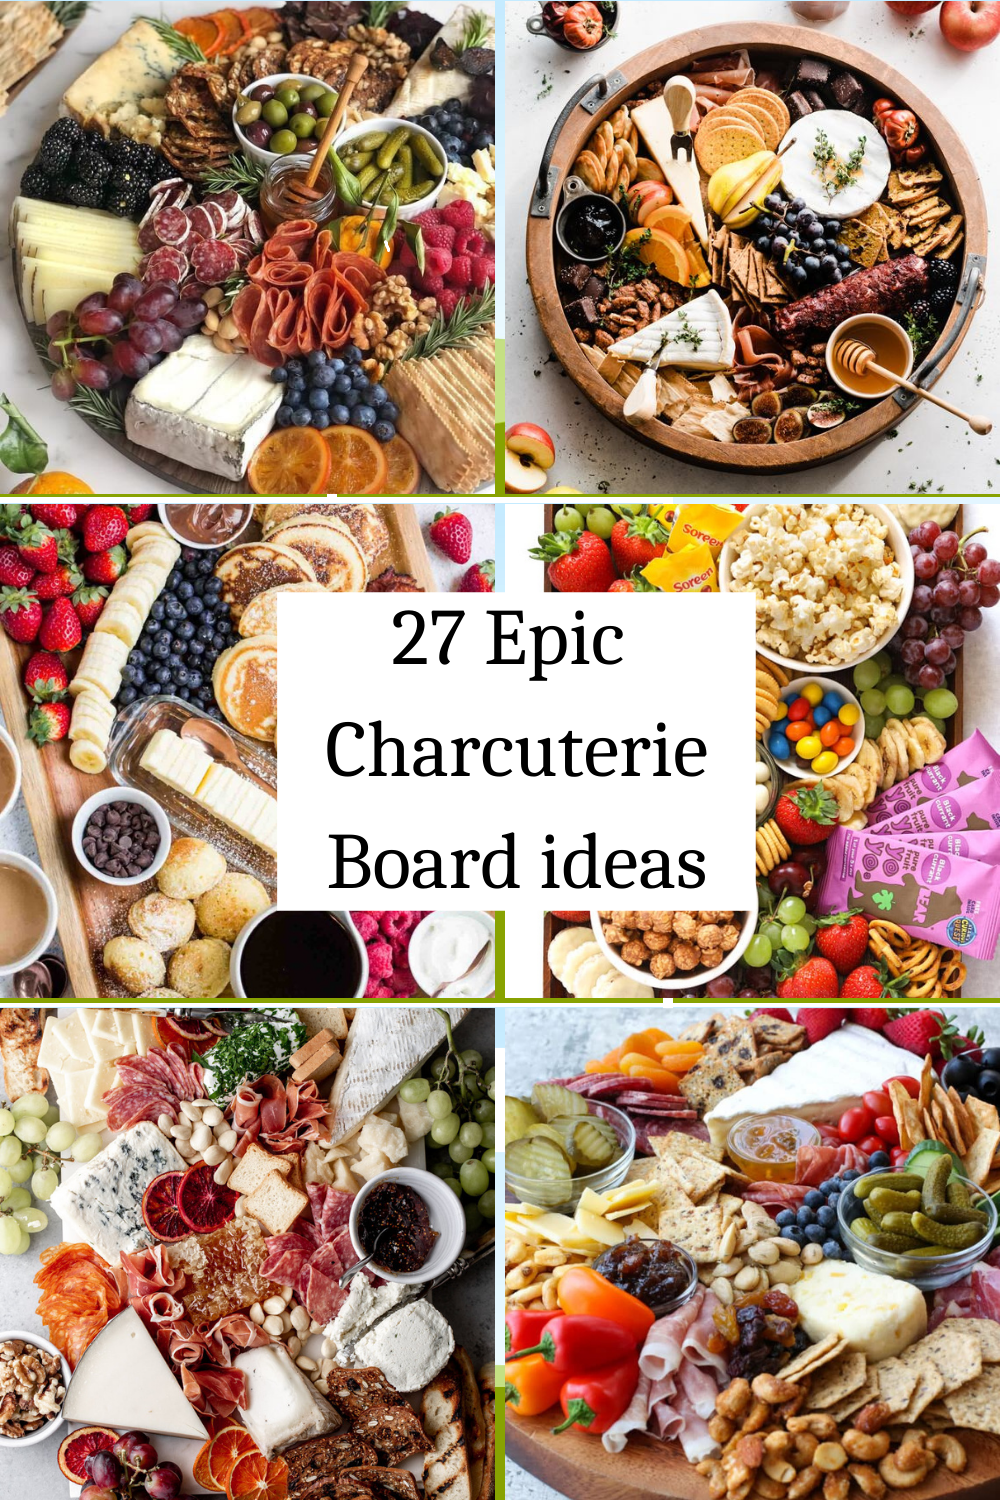 27 Epic Charcuterie Board ideas